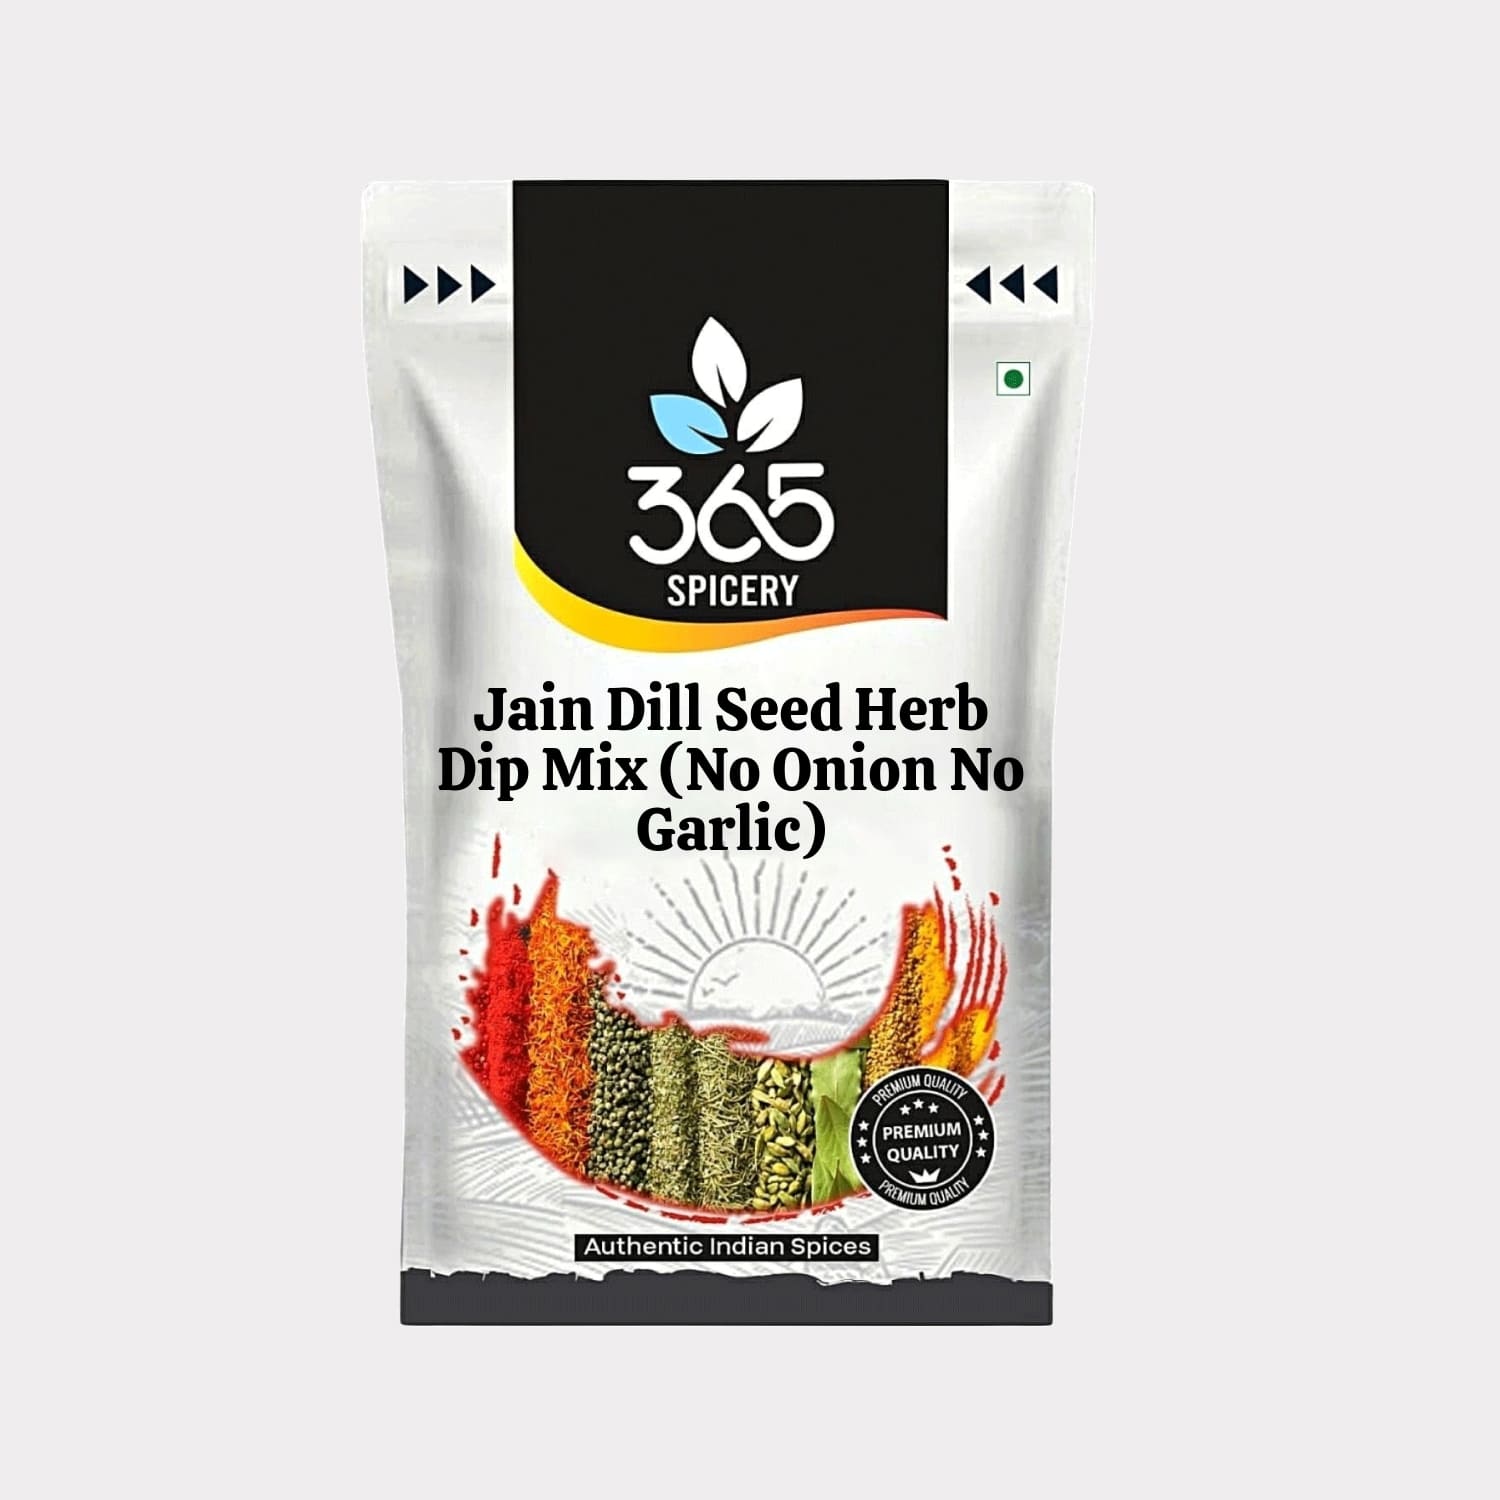 Jain Dill Seed Herb Dip Mix (No Onion No Garlic)